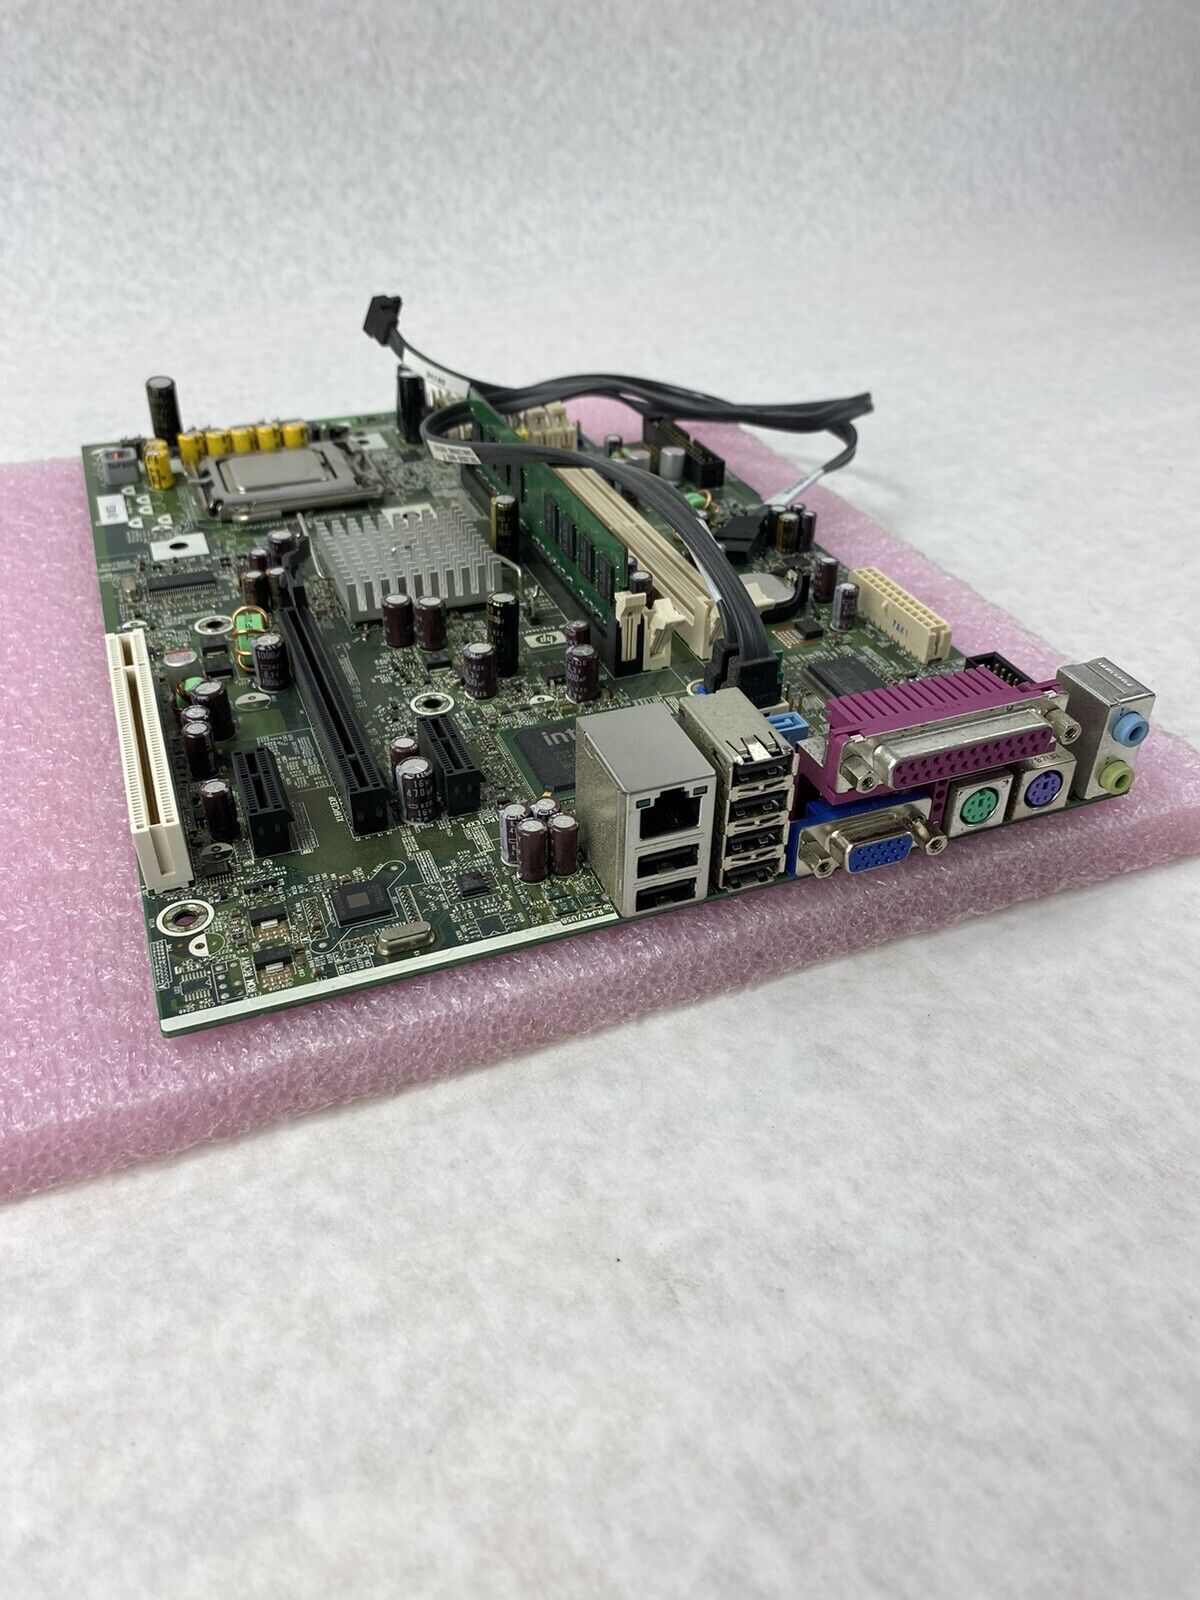 HP Compaq dc7800p Motherboard Core 2 Duo E6550 2.33GHz 2GB RAM 